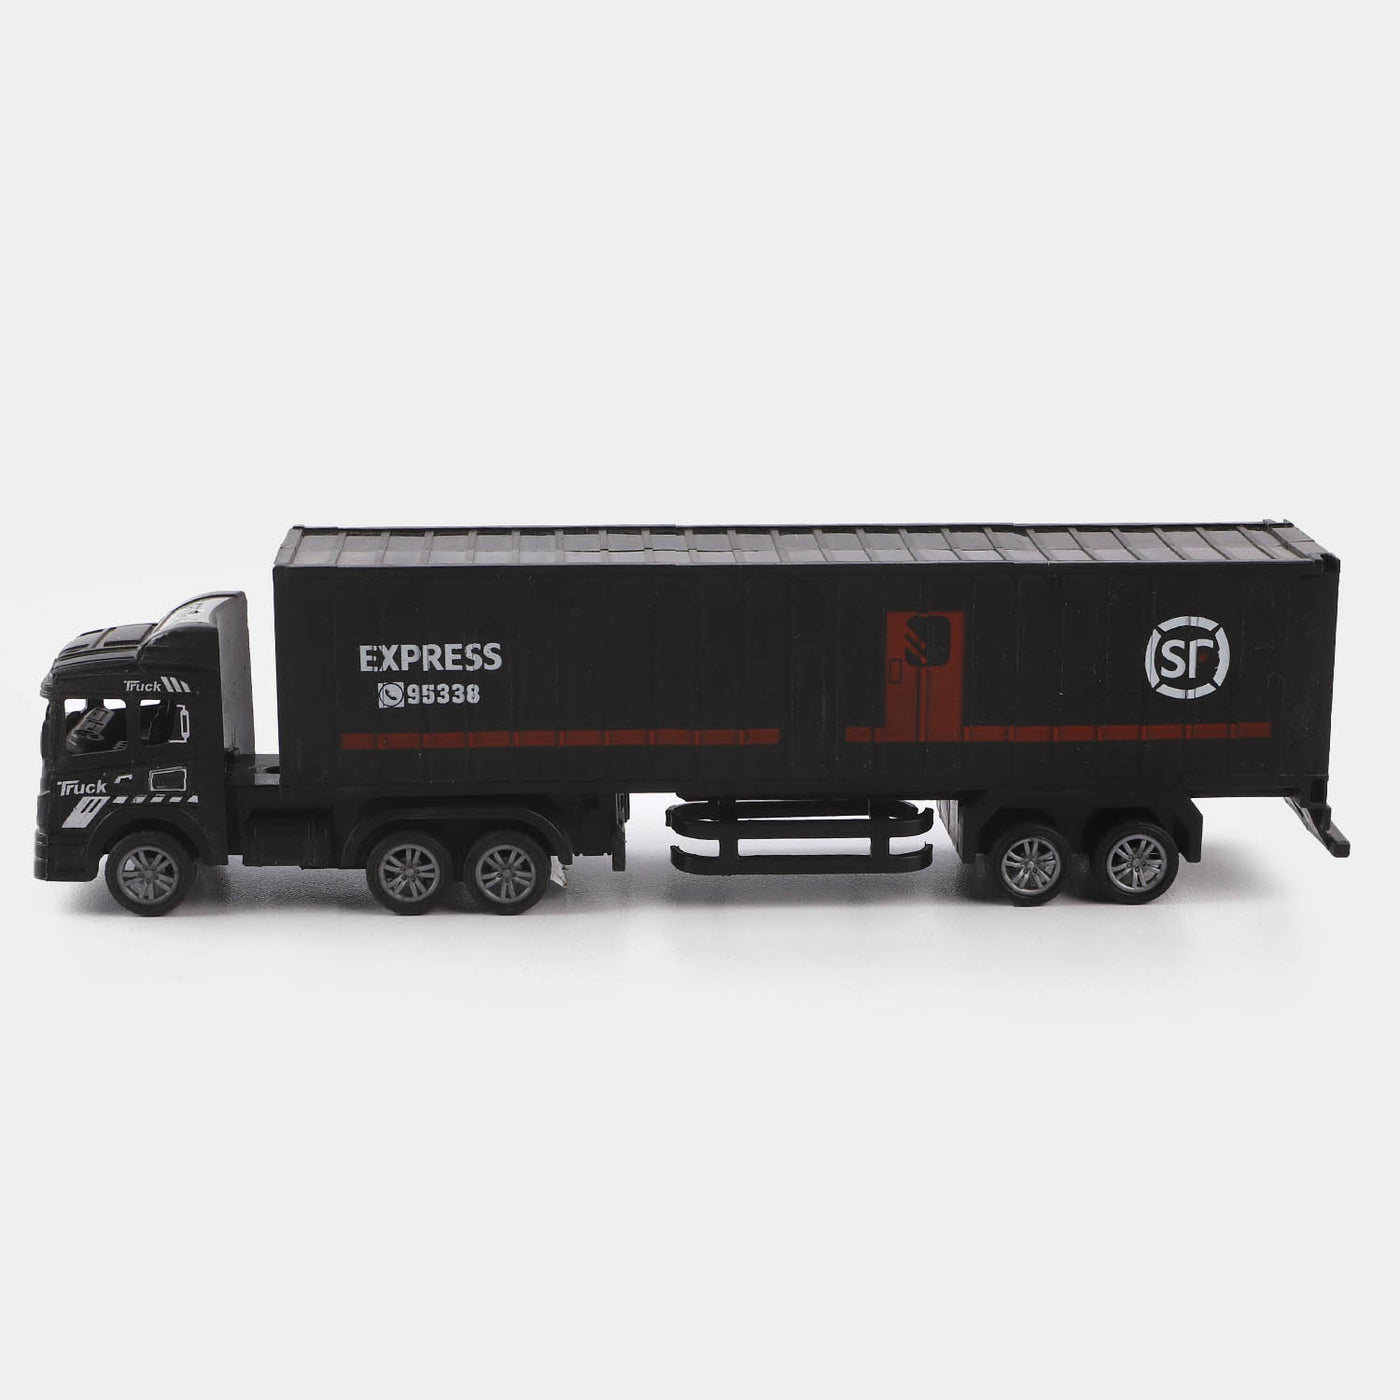 Die-Cast Mini Cargo Truck Toy For Kids